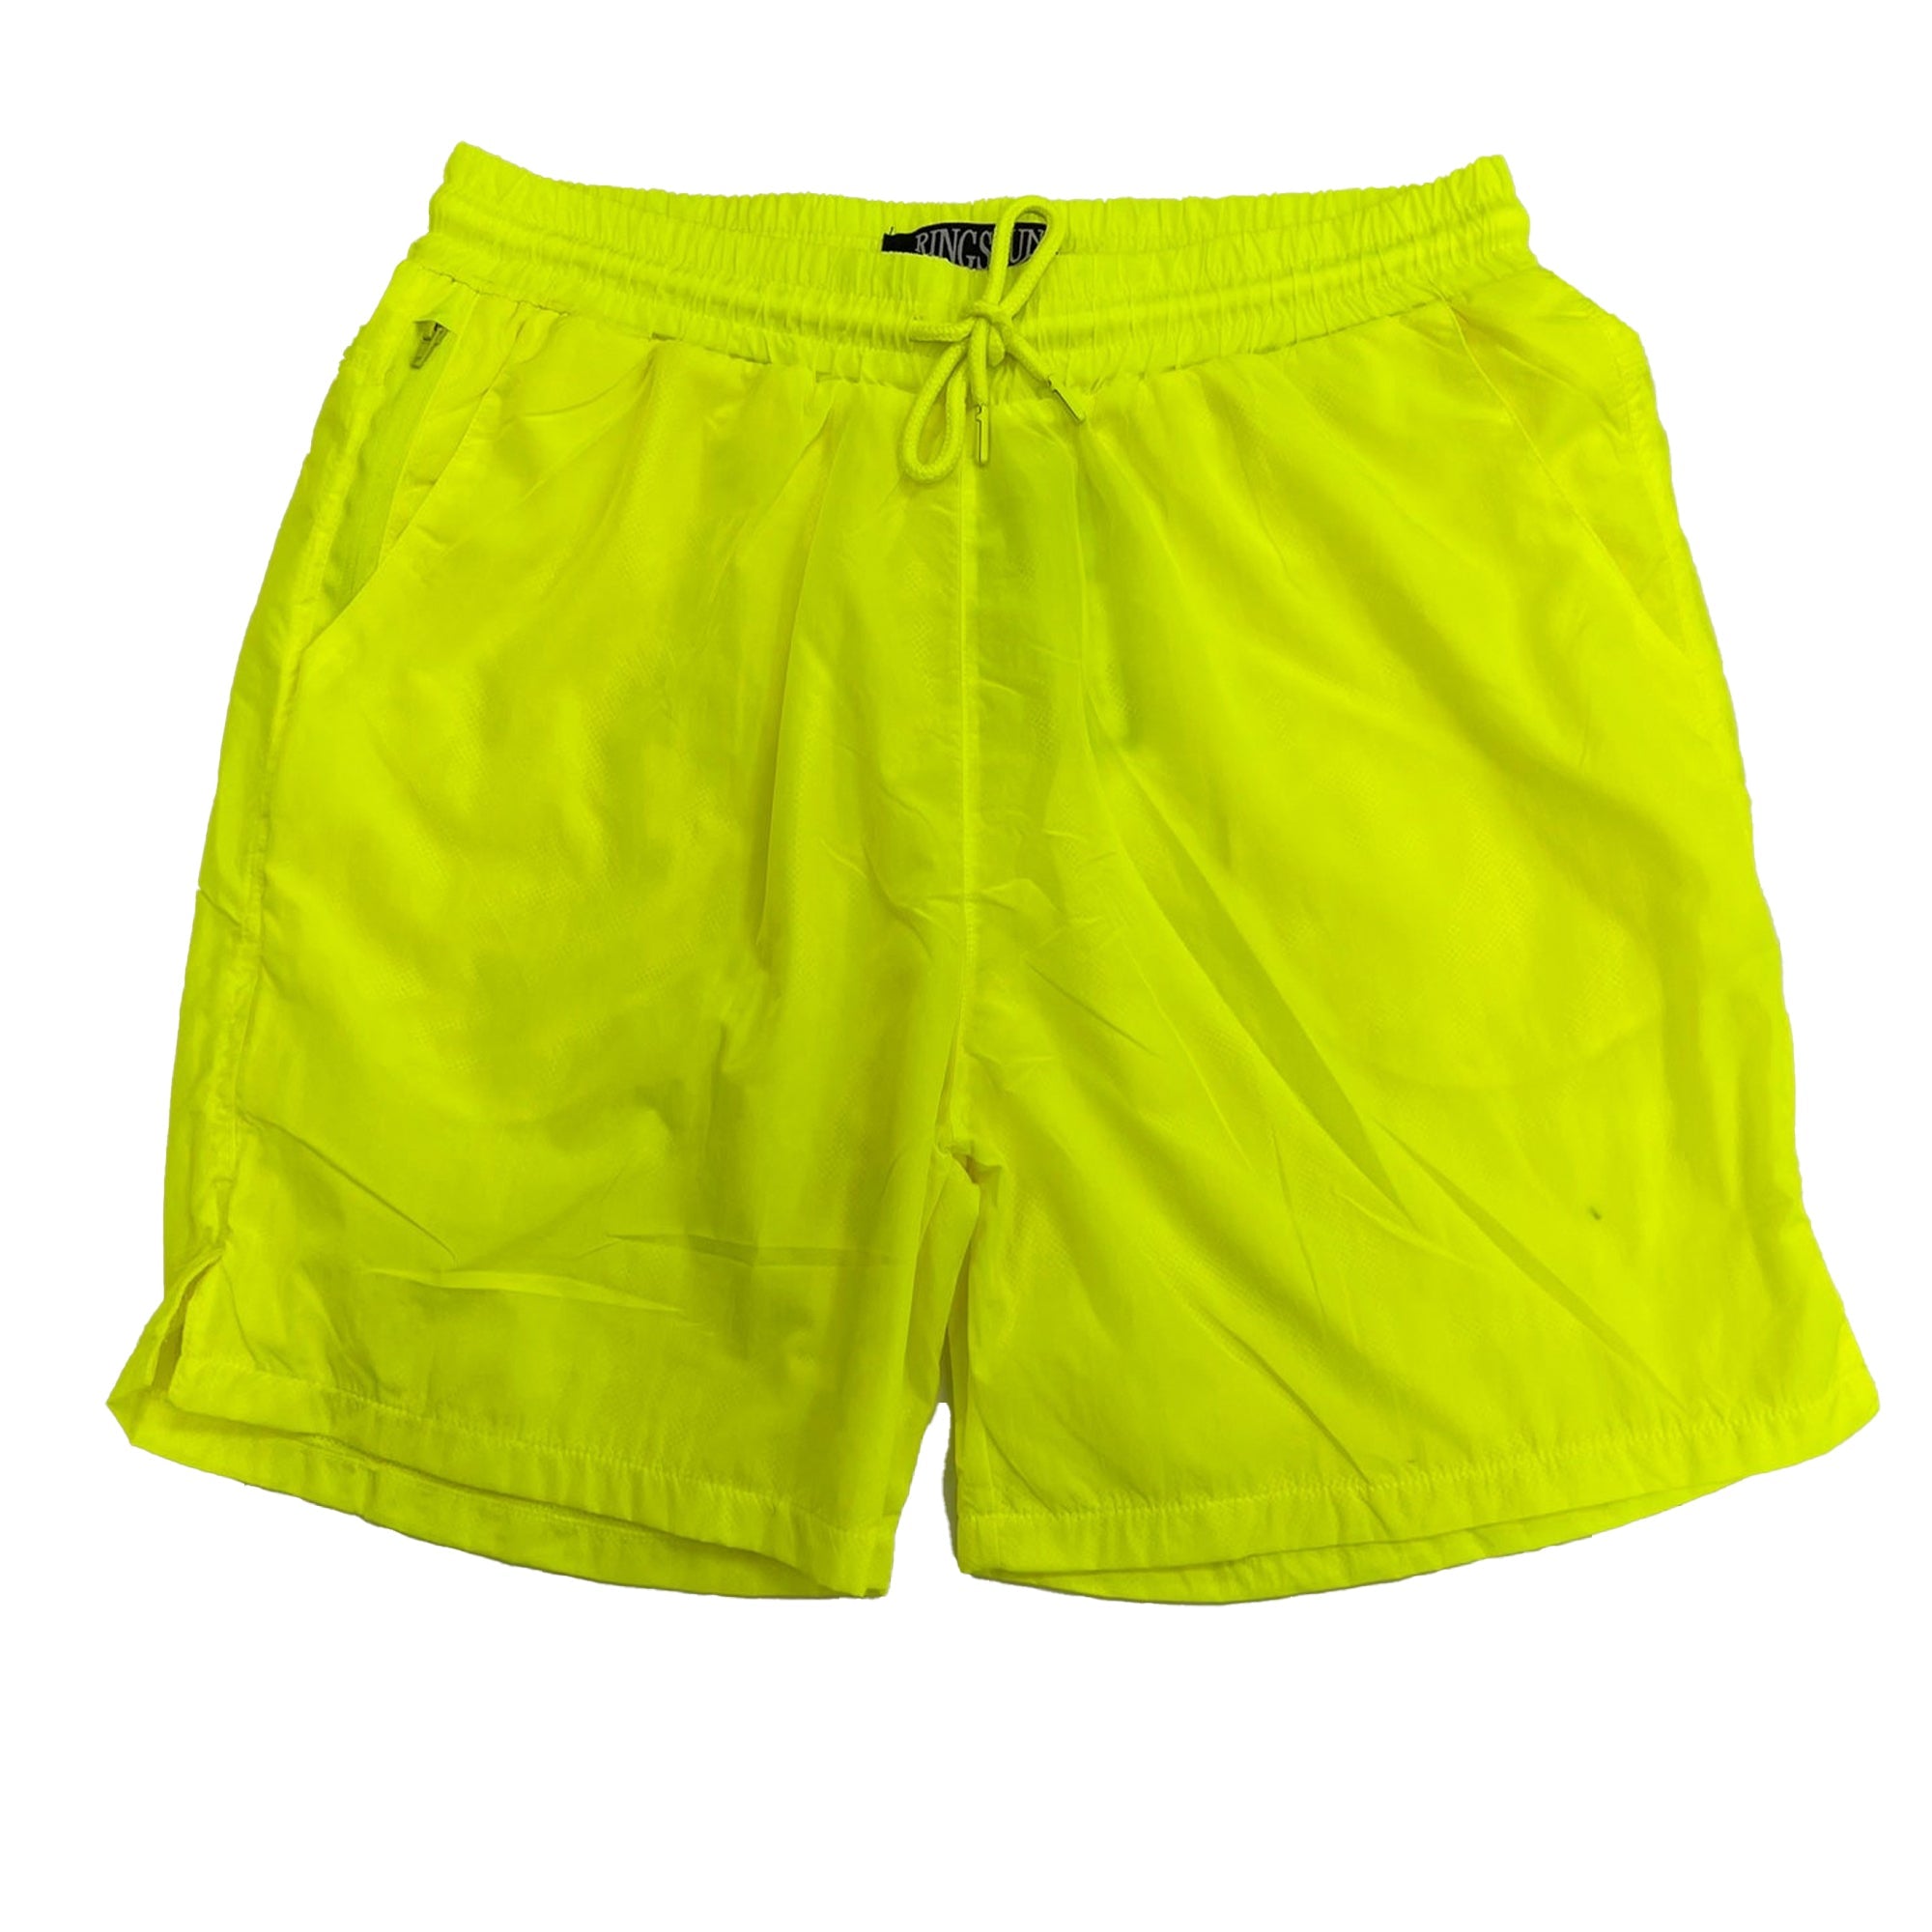 Rebel Minds Men Crinkled Nylon Neon Shorts (Neon Yellow)1